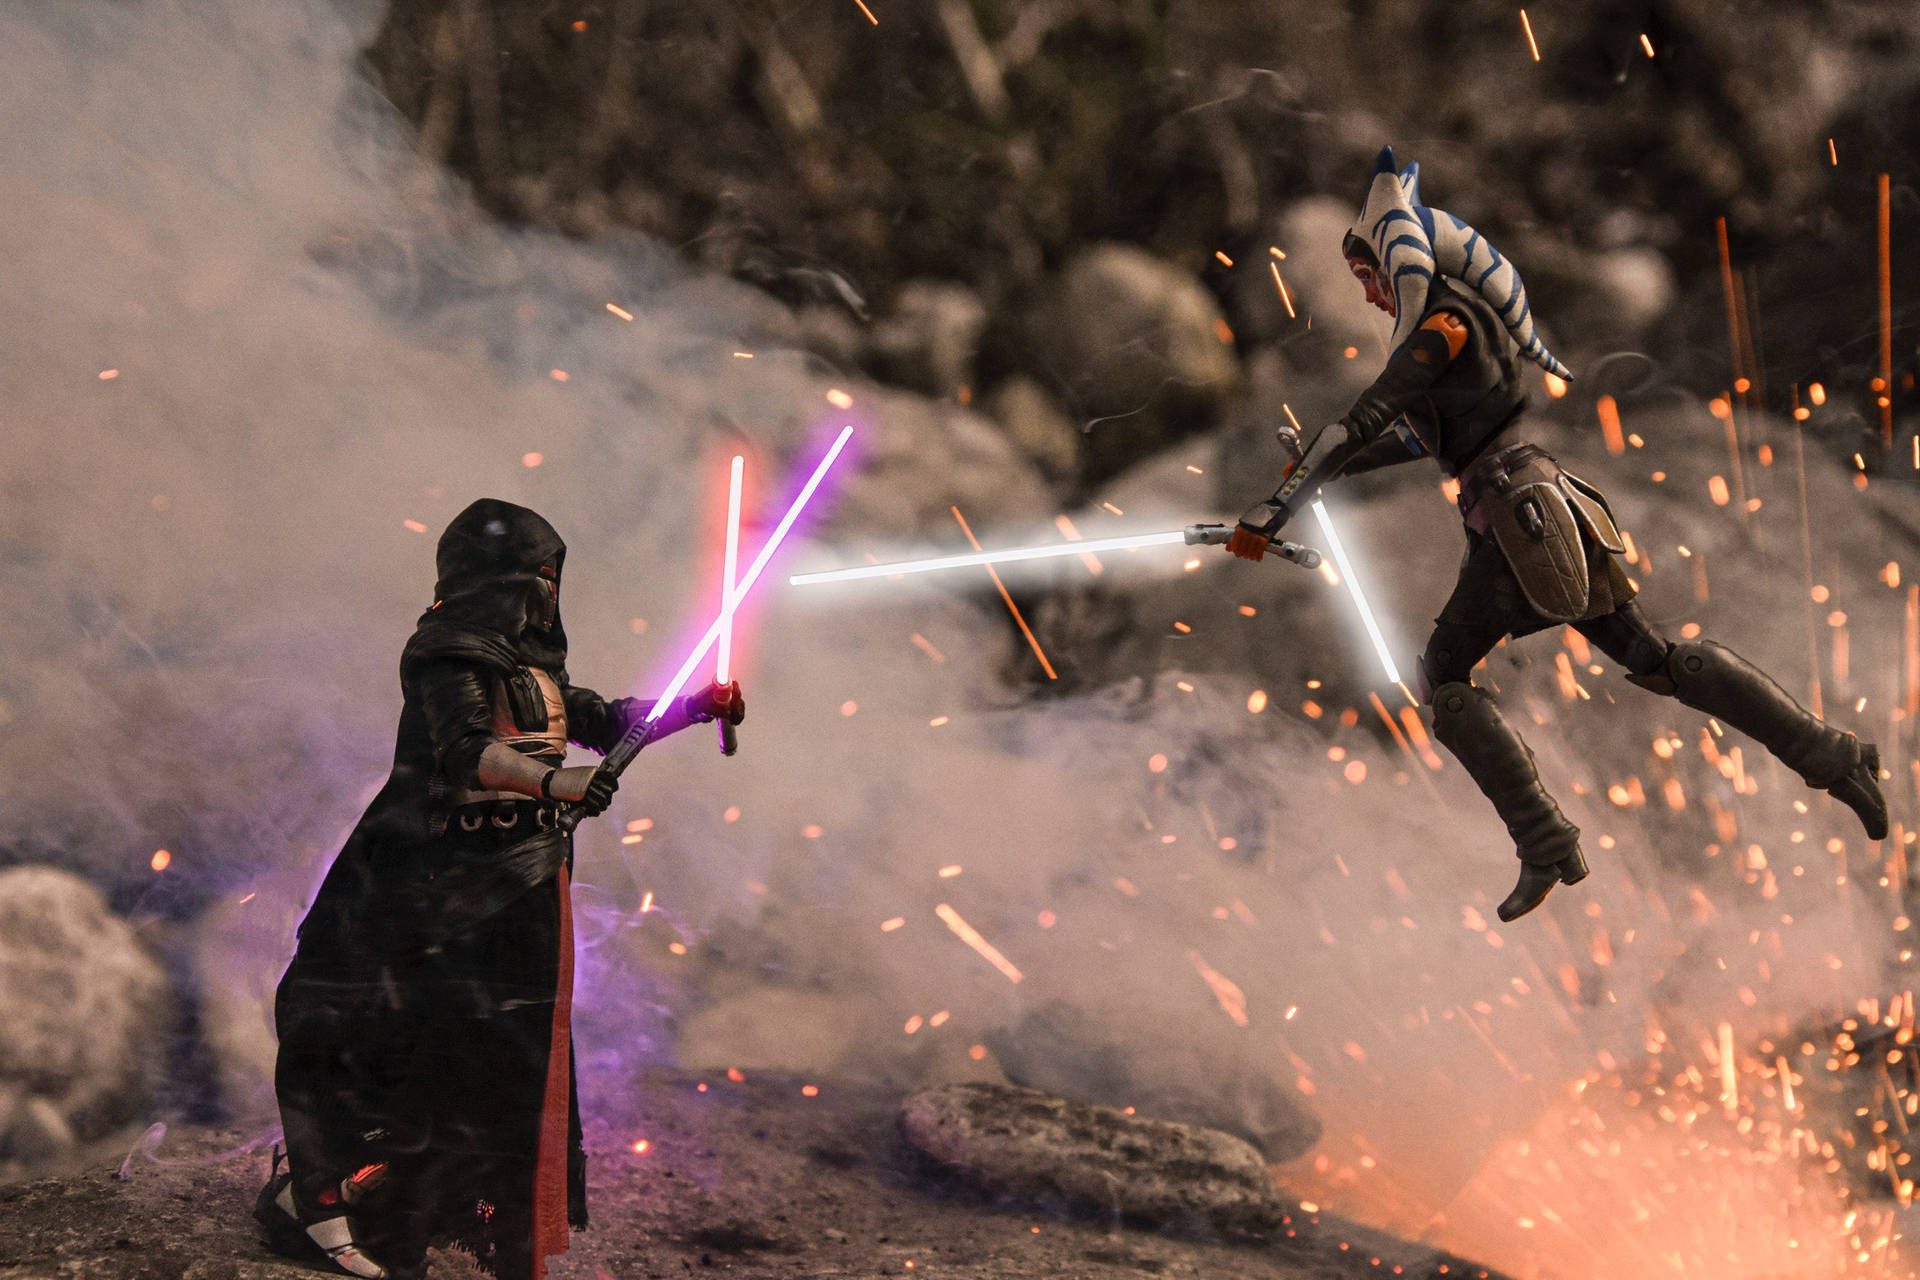 Darth Revan Battles Ahsoka Tano In Iconic 'star Wars: Knights Of The Old Republic' Scene